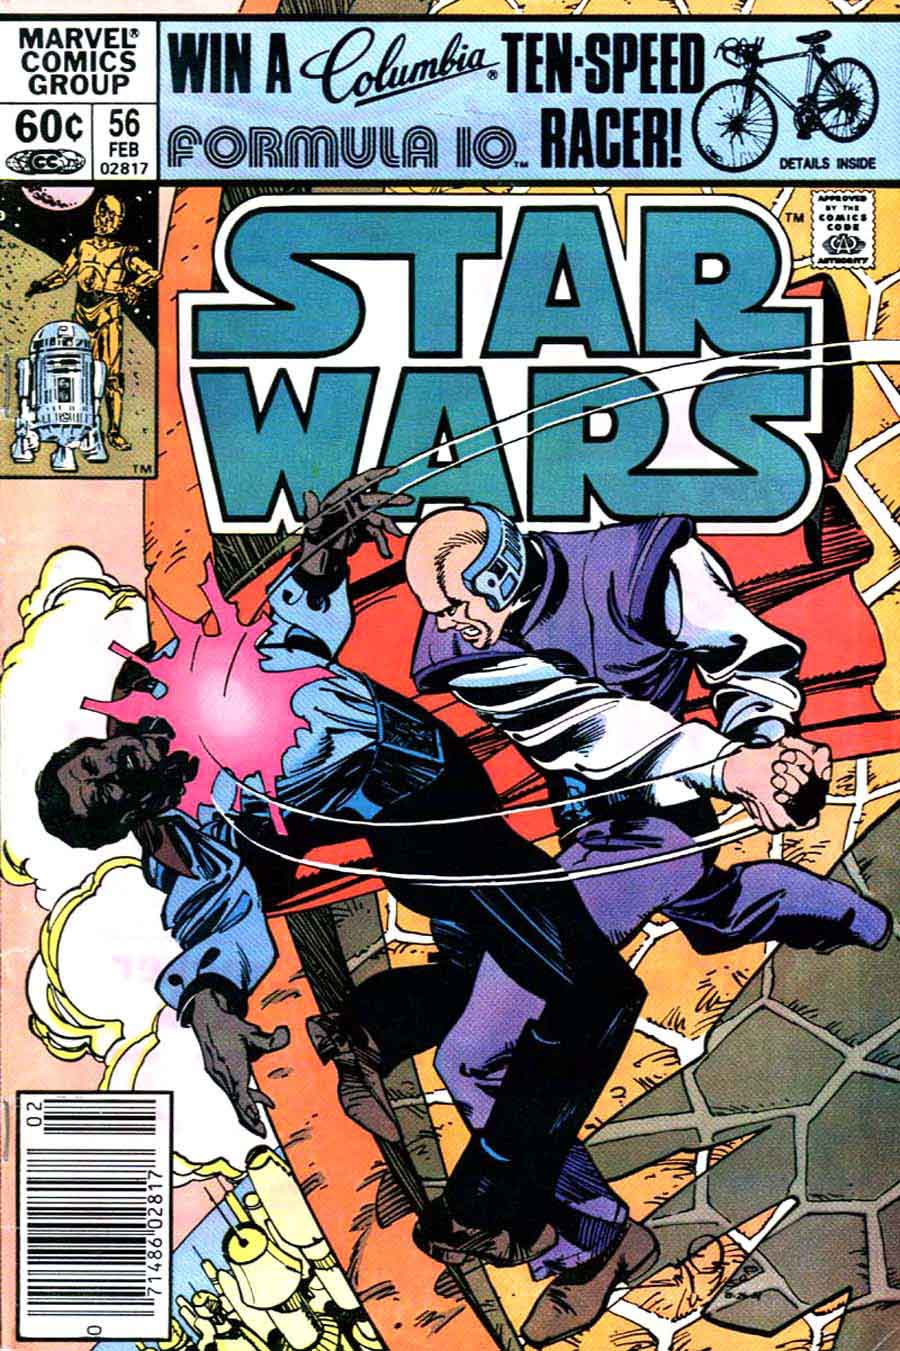 Walt Simonson science fiction 1980s lando calrissian marvel comic book cover - Star Wars #56